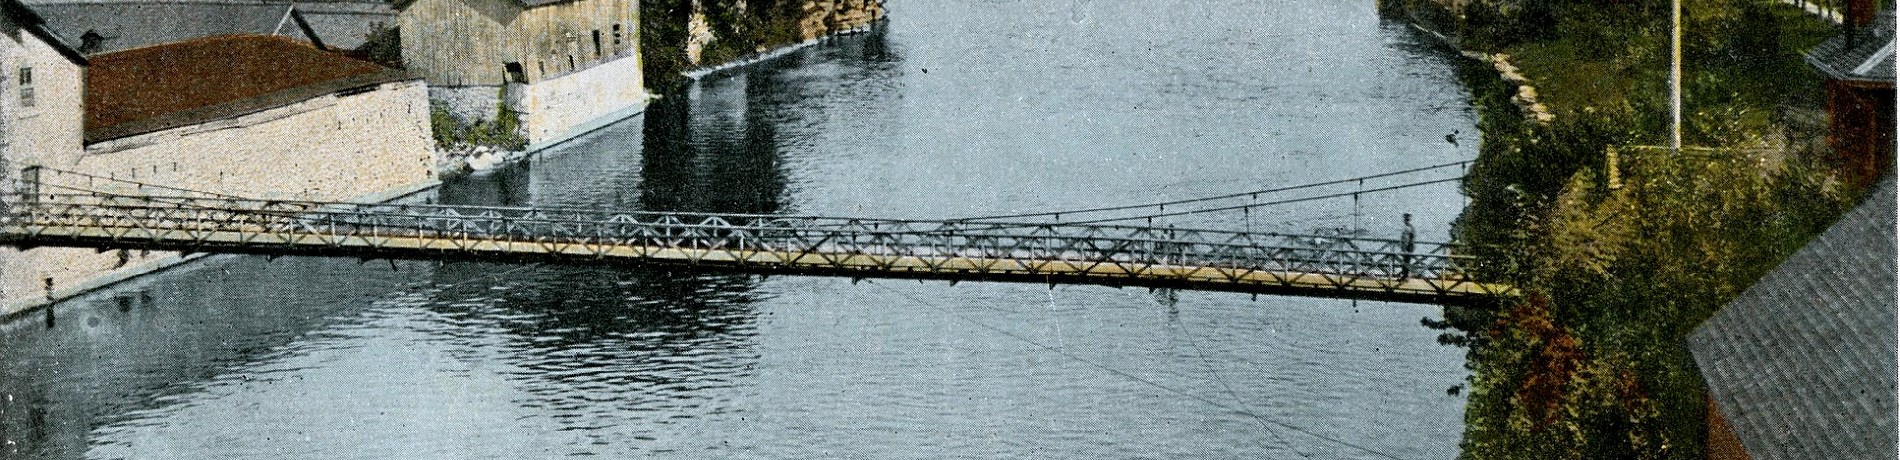 Postcard of footbridge